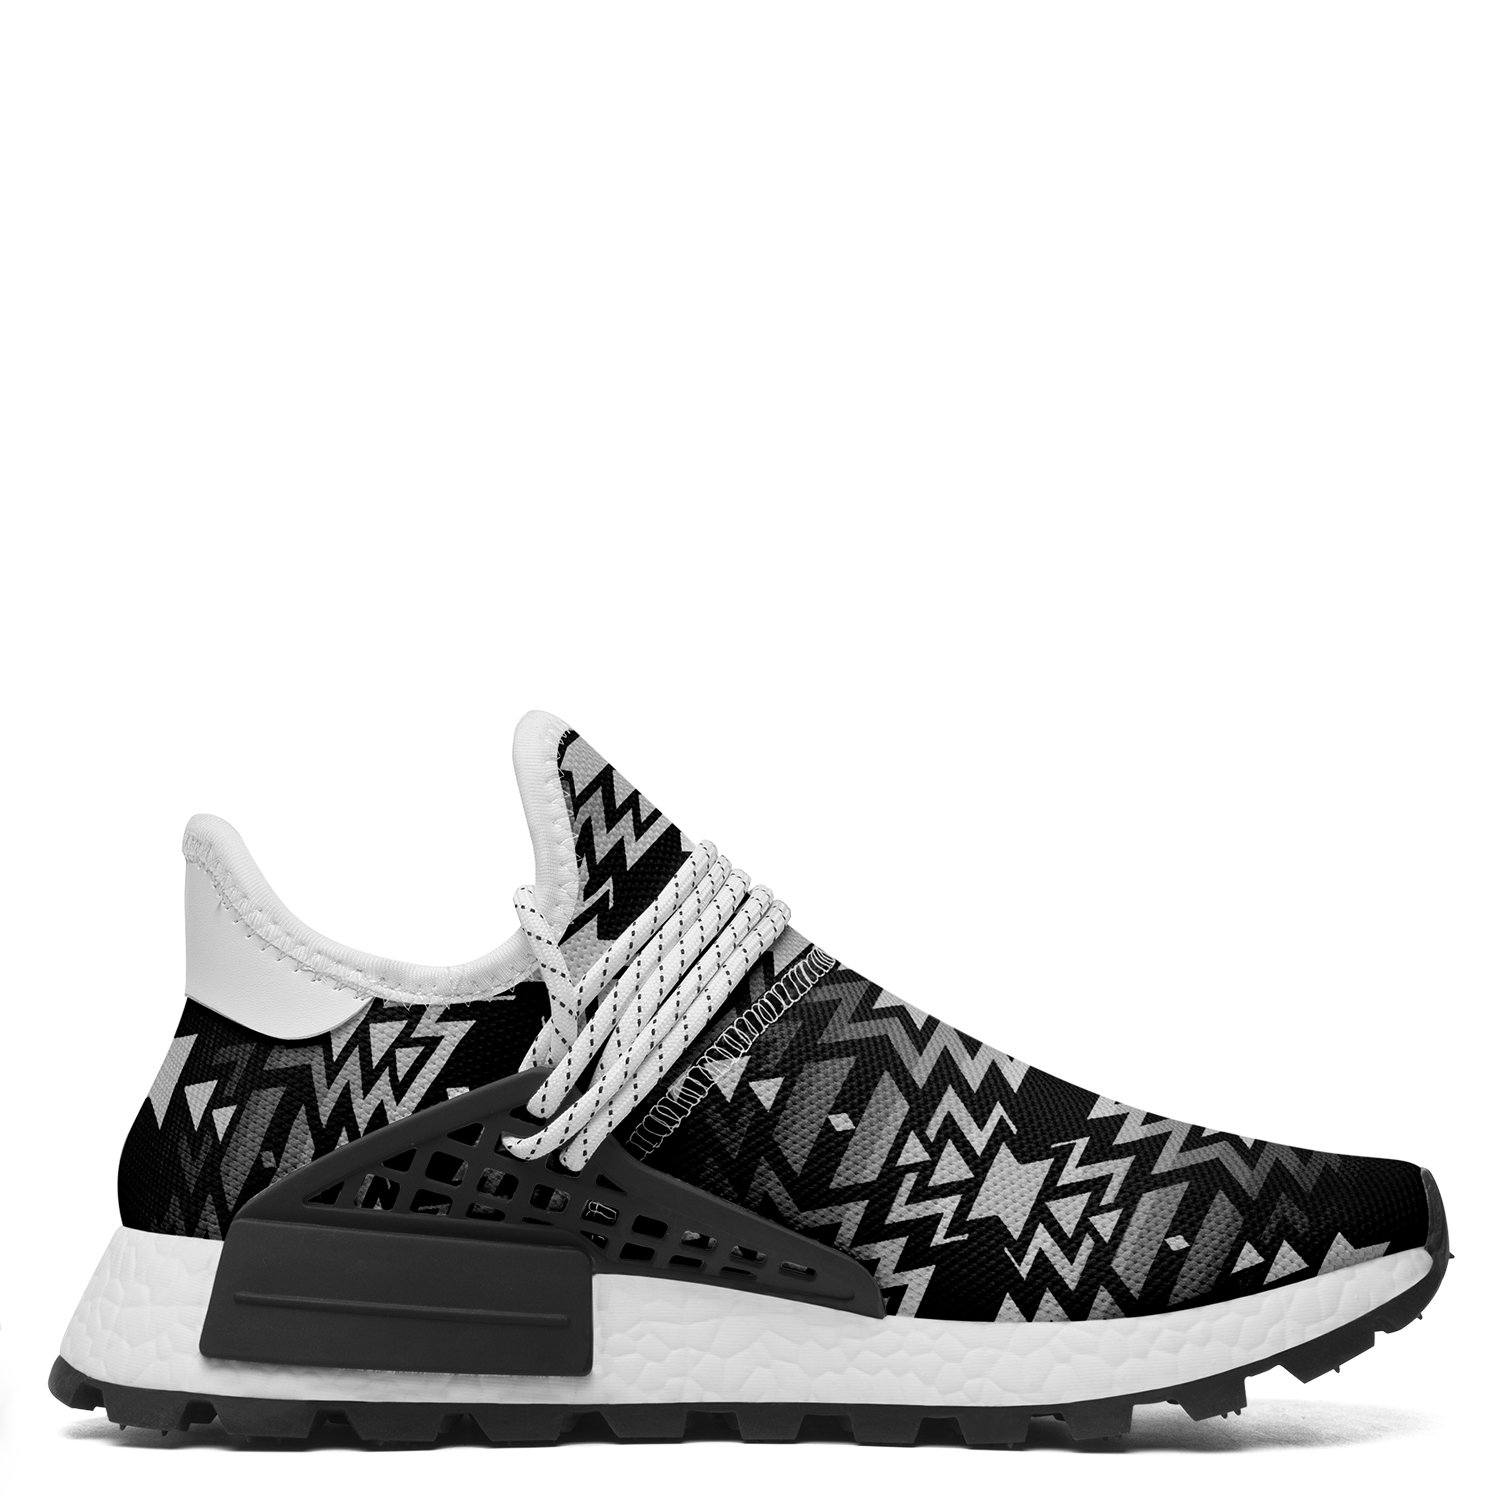 Black Fire Black and White Okaki Sneakers Shoes 49 Dzine 